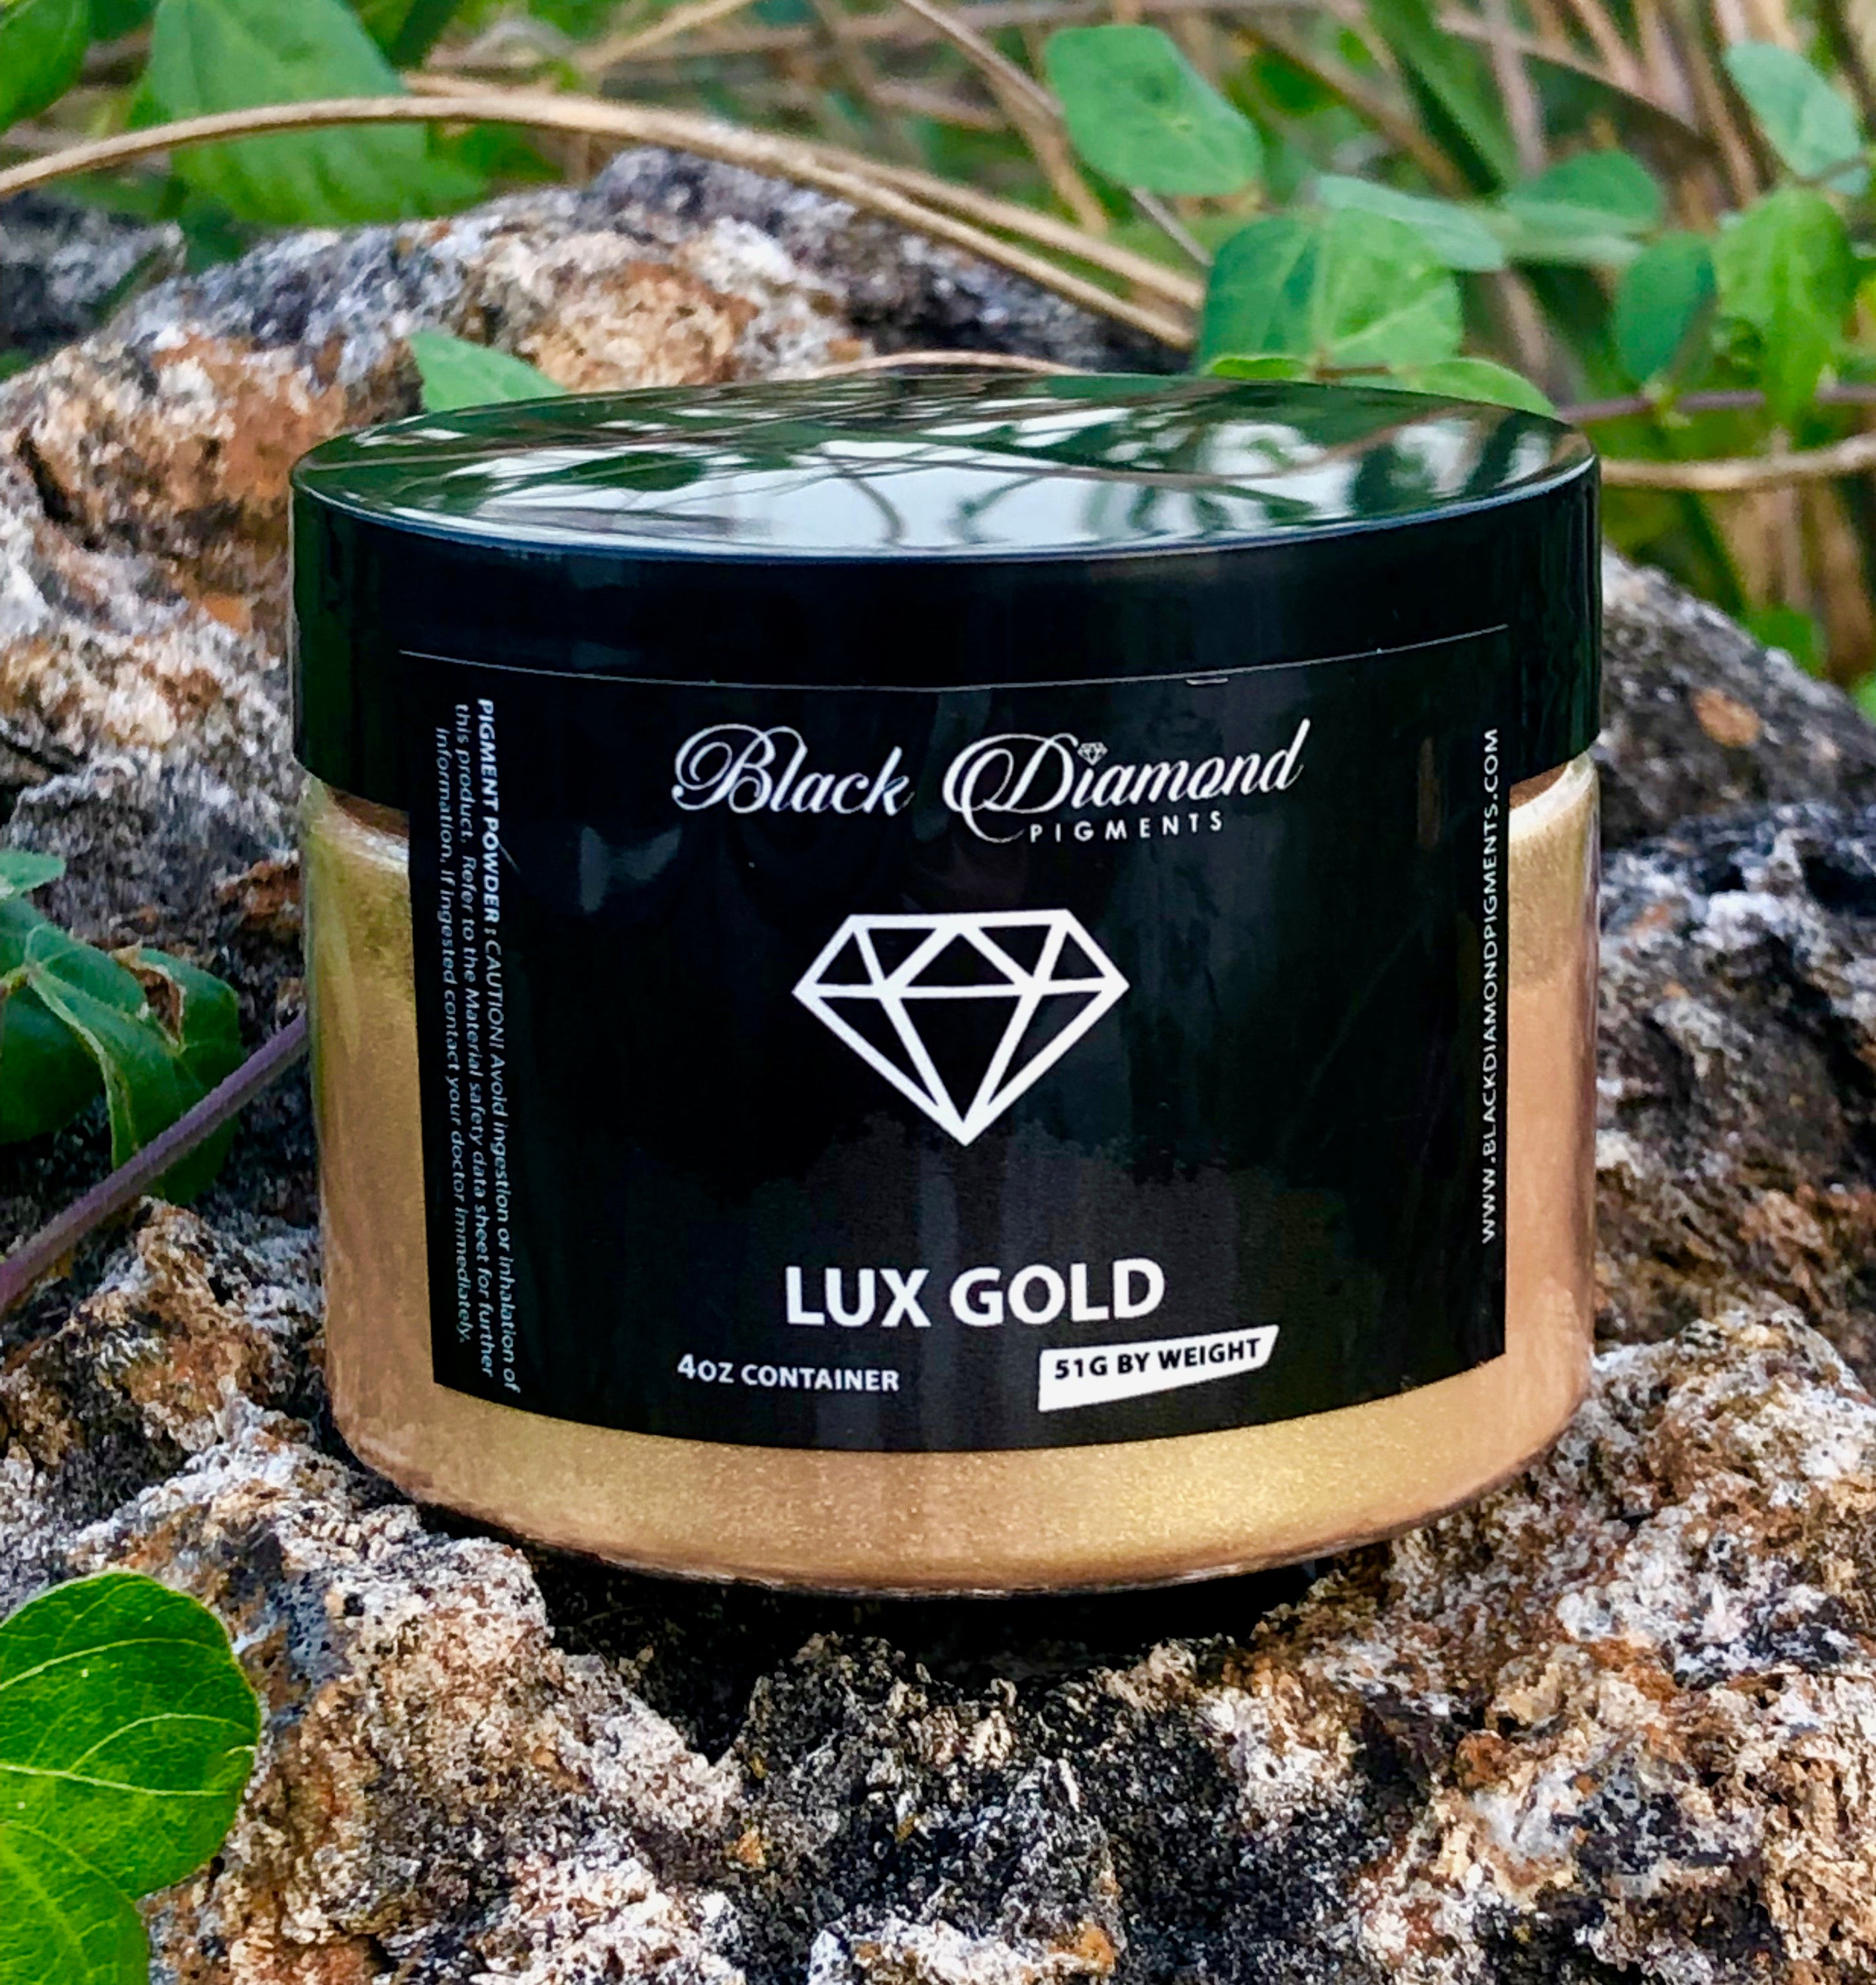 "LUX GOLD" Black Diamond Pigments